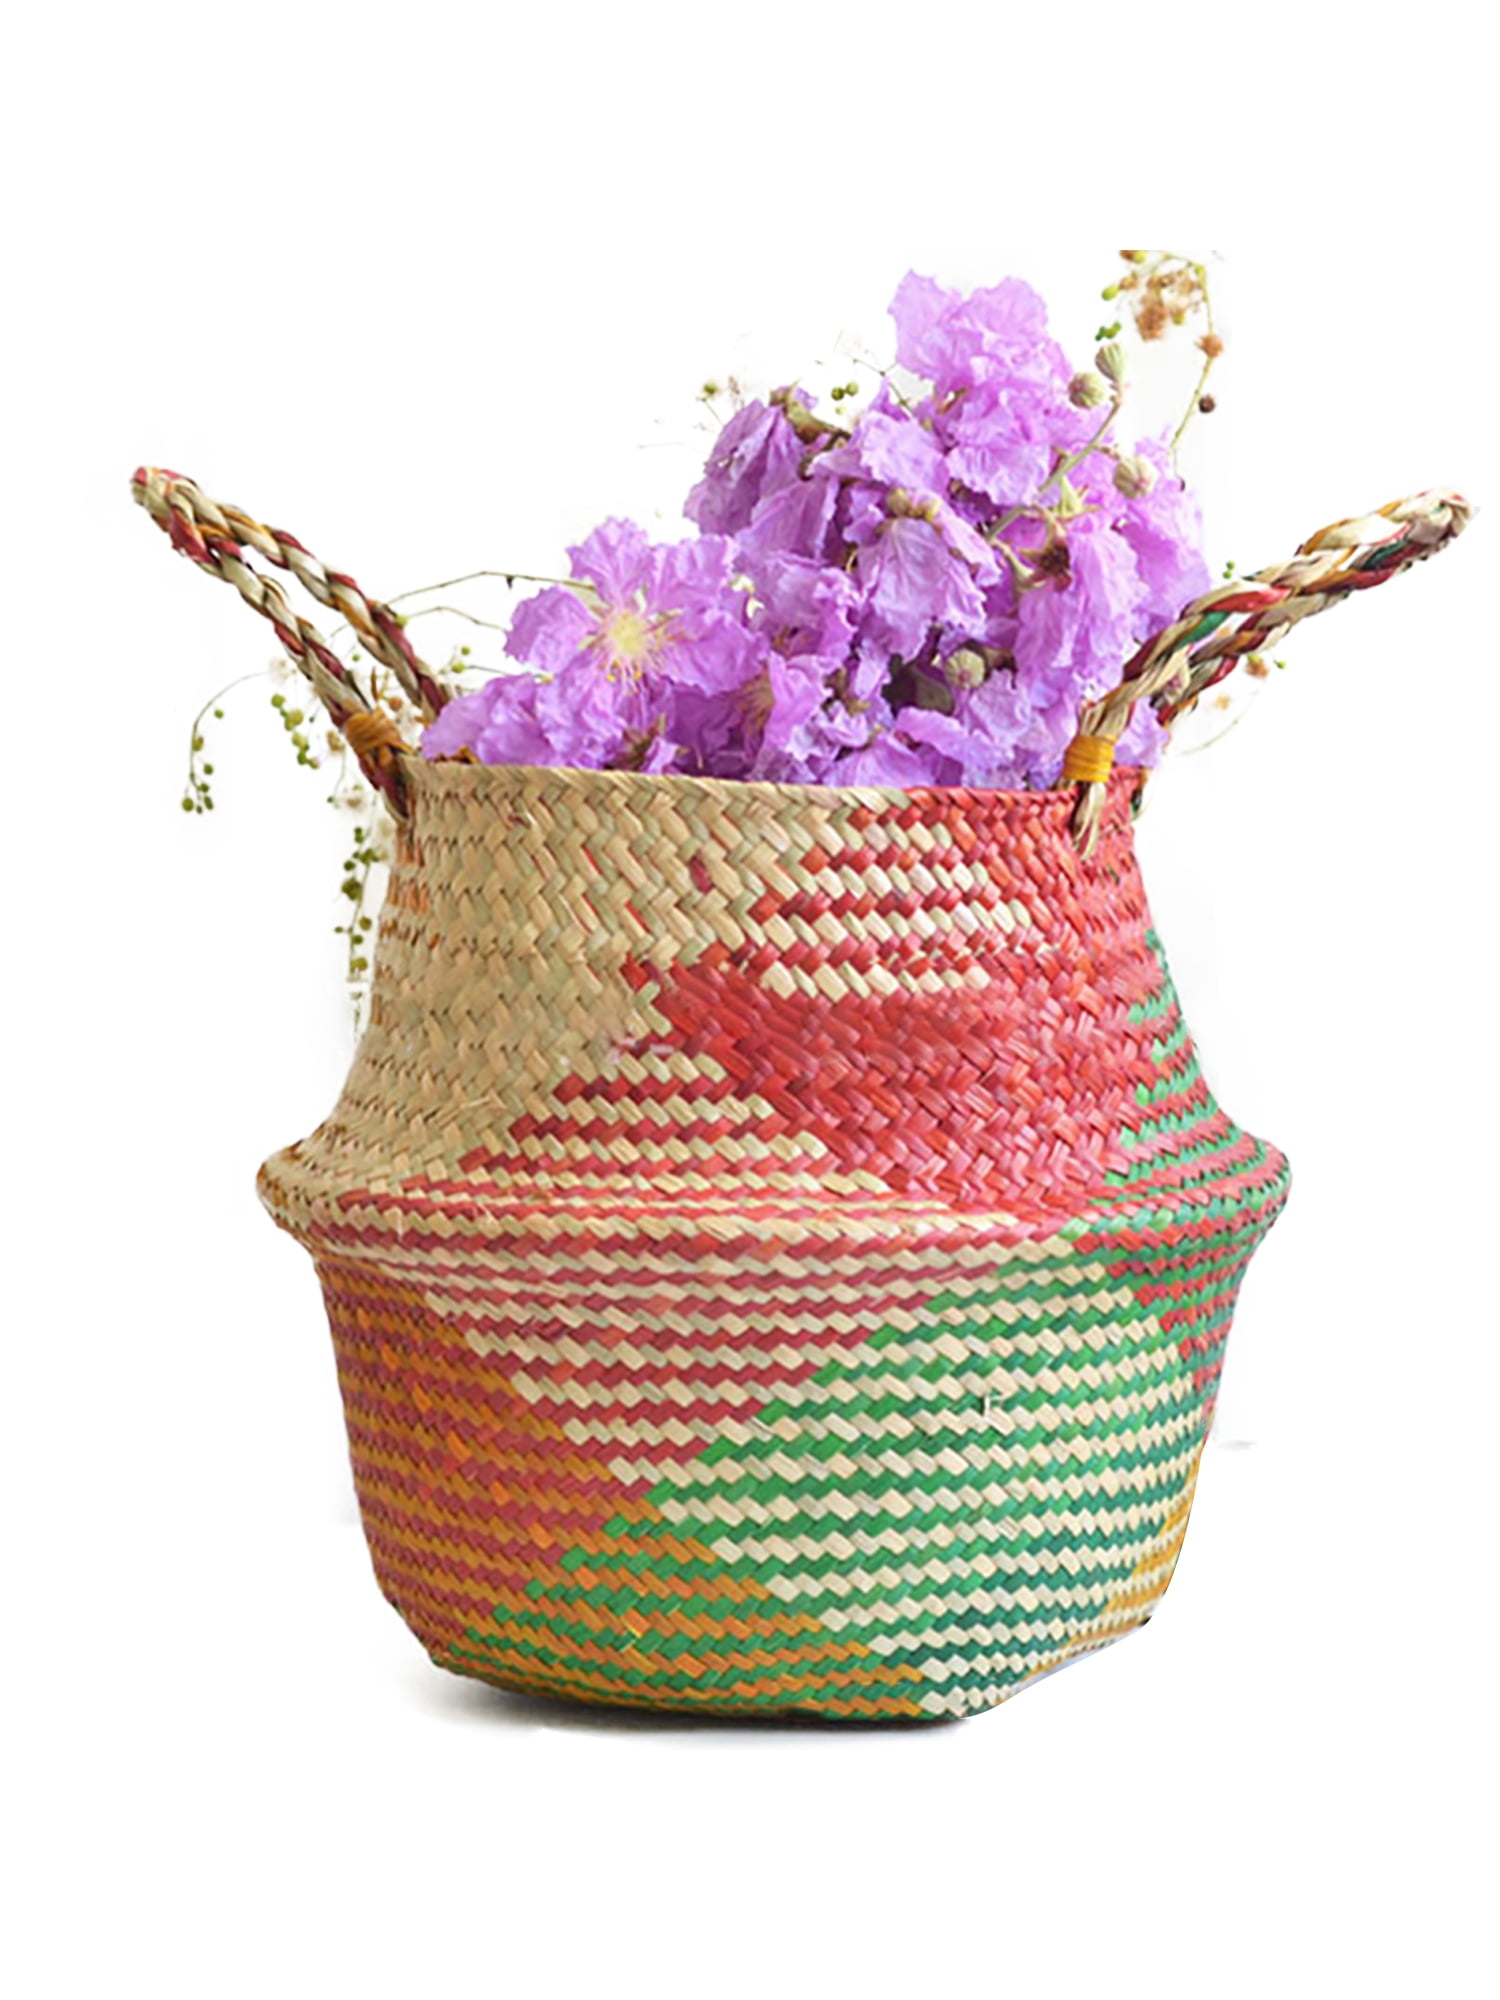 Details about   Woven Storage Flower Plants Seagrass Wicker Basket Straw Pots Bag Home Decor B3 